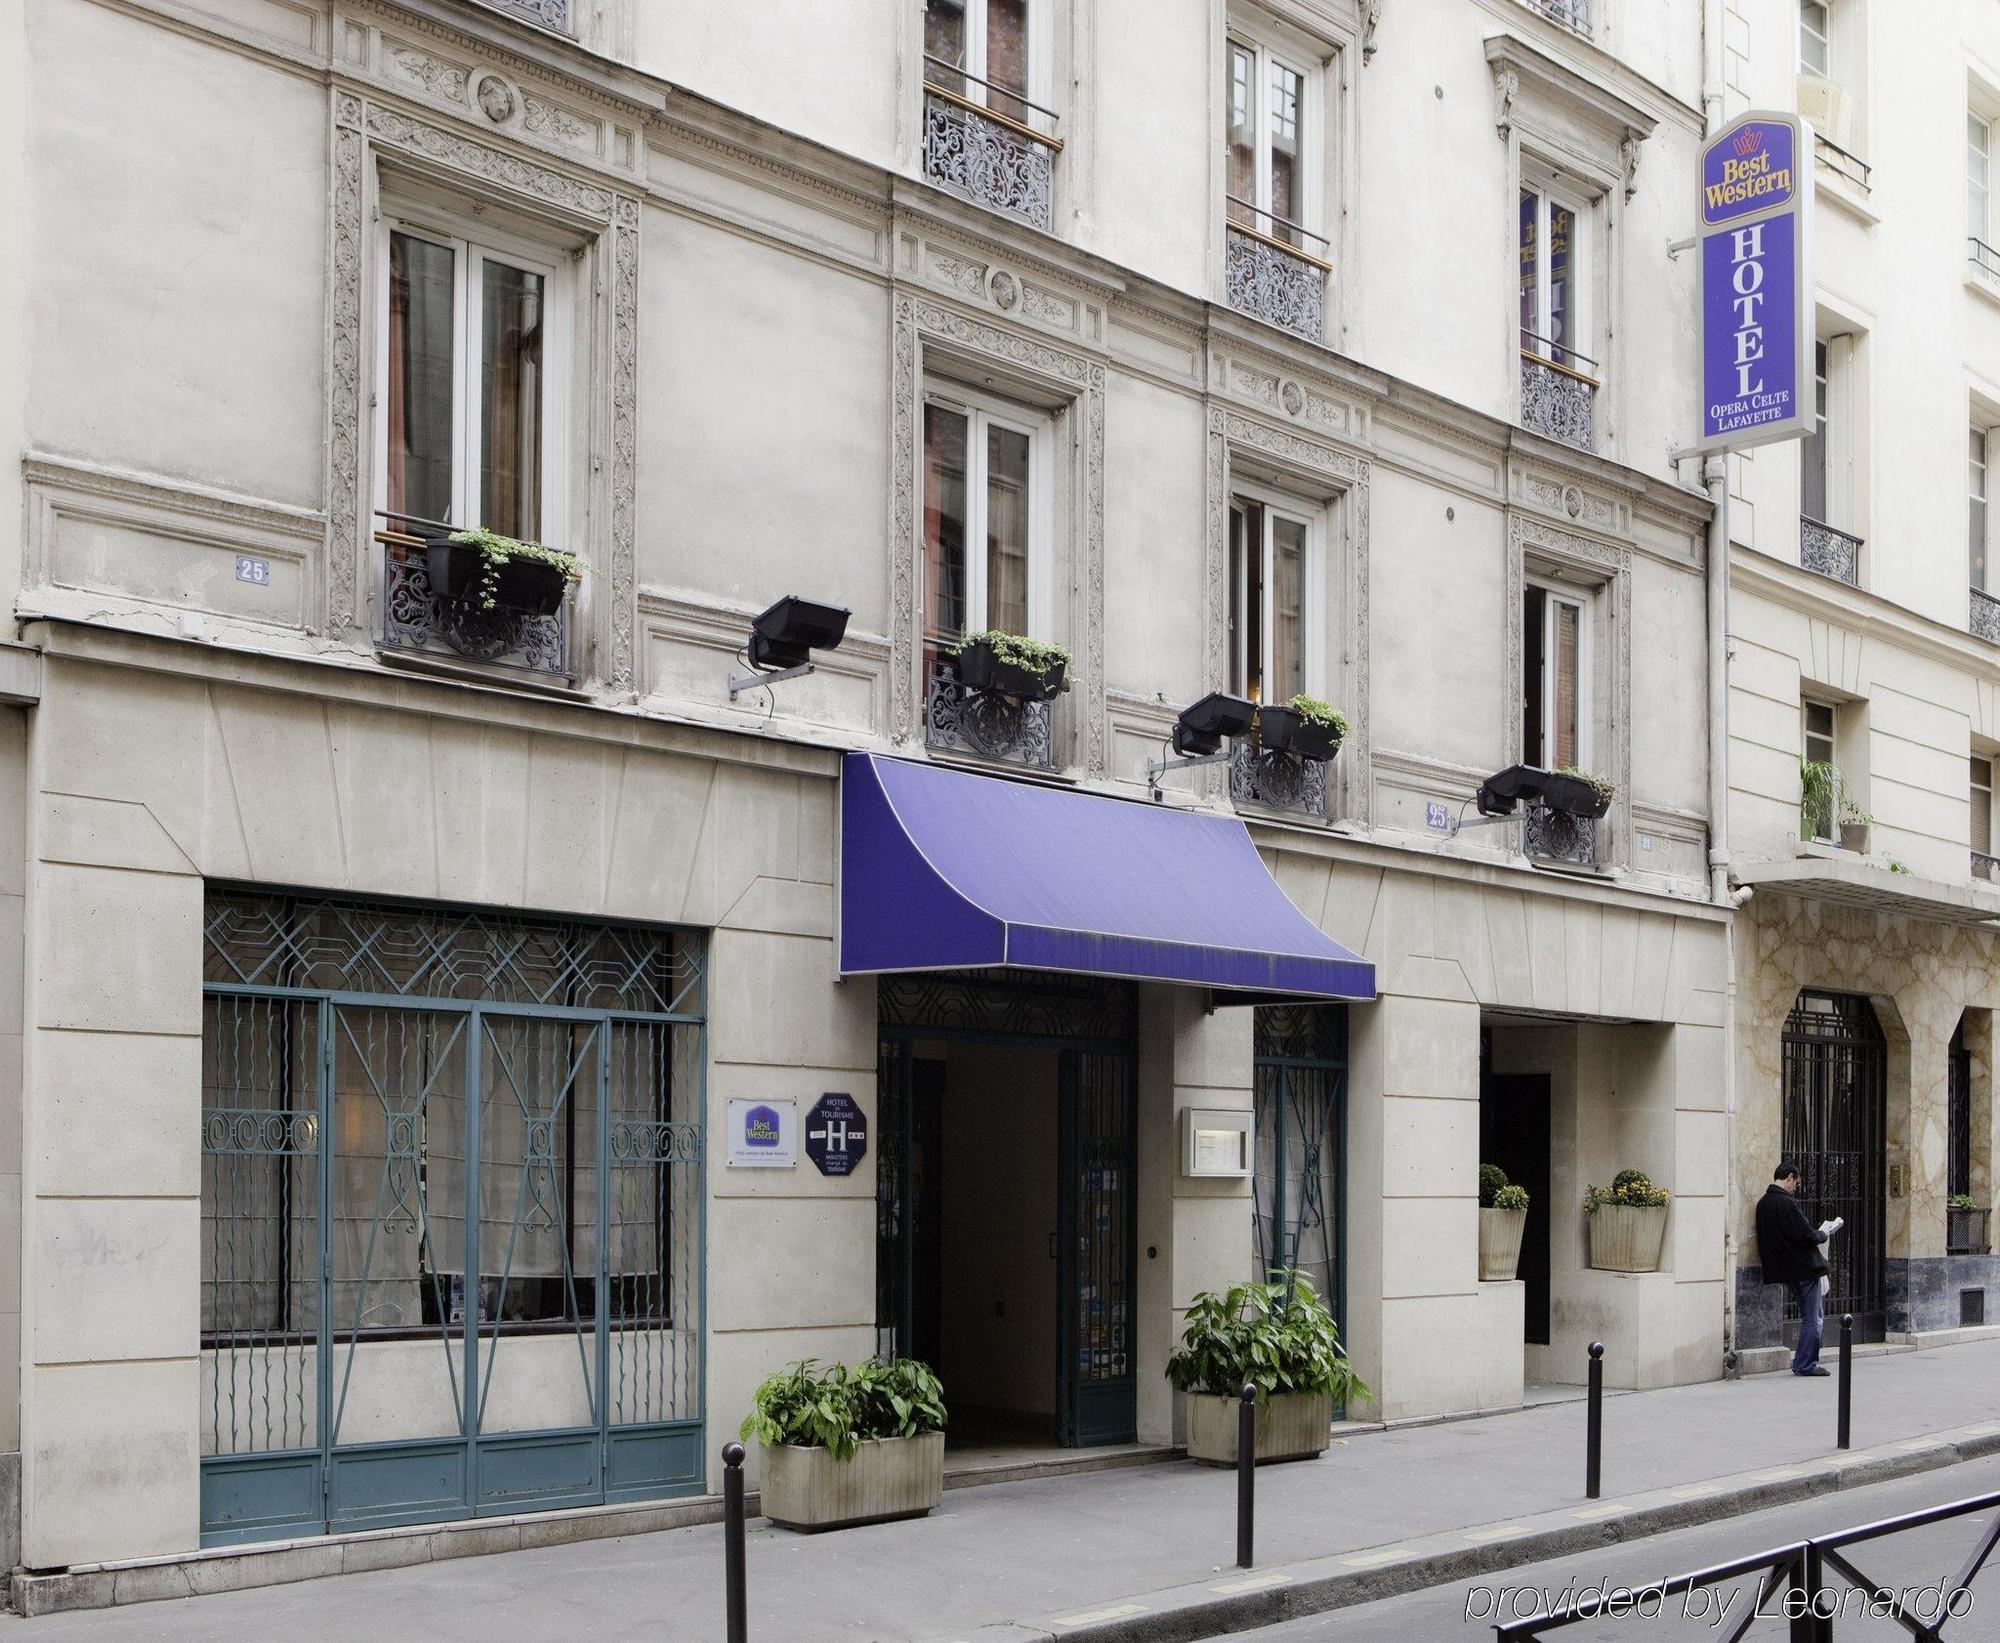 New Hotel Lafayette Parijs Buitenkant foto